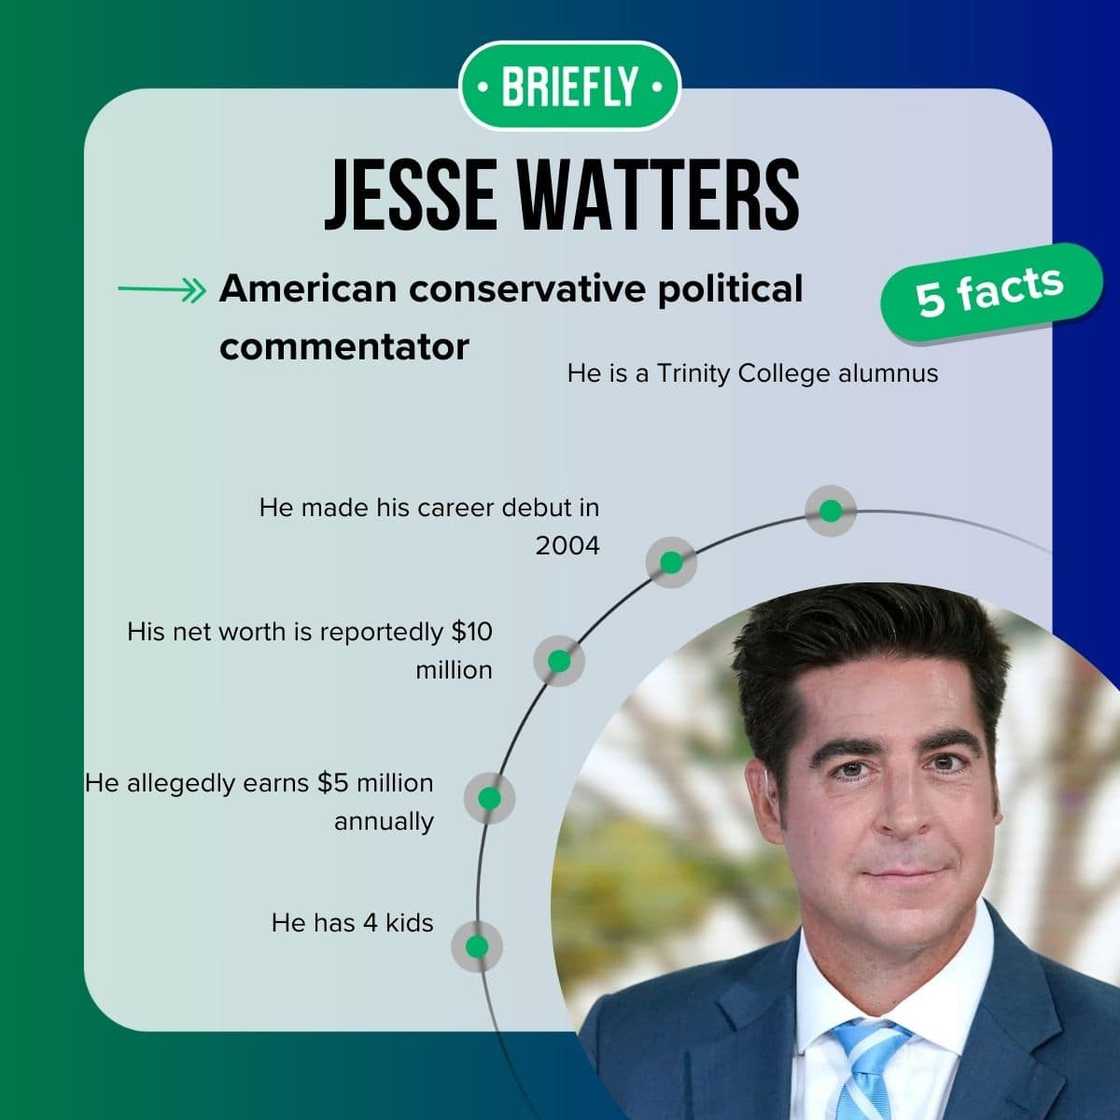 Jesse Watters’ facts